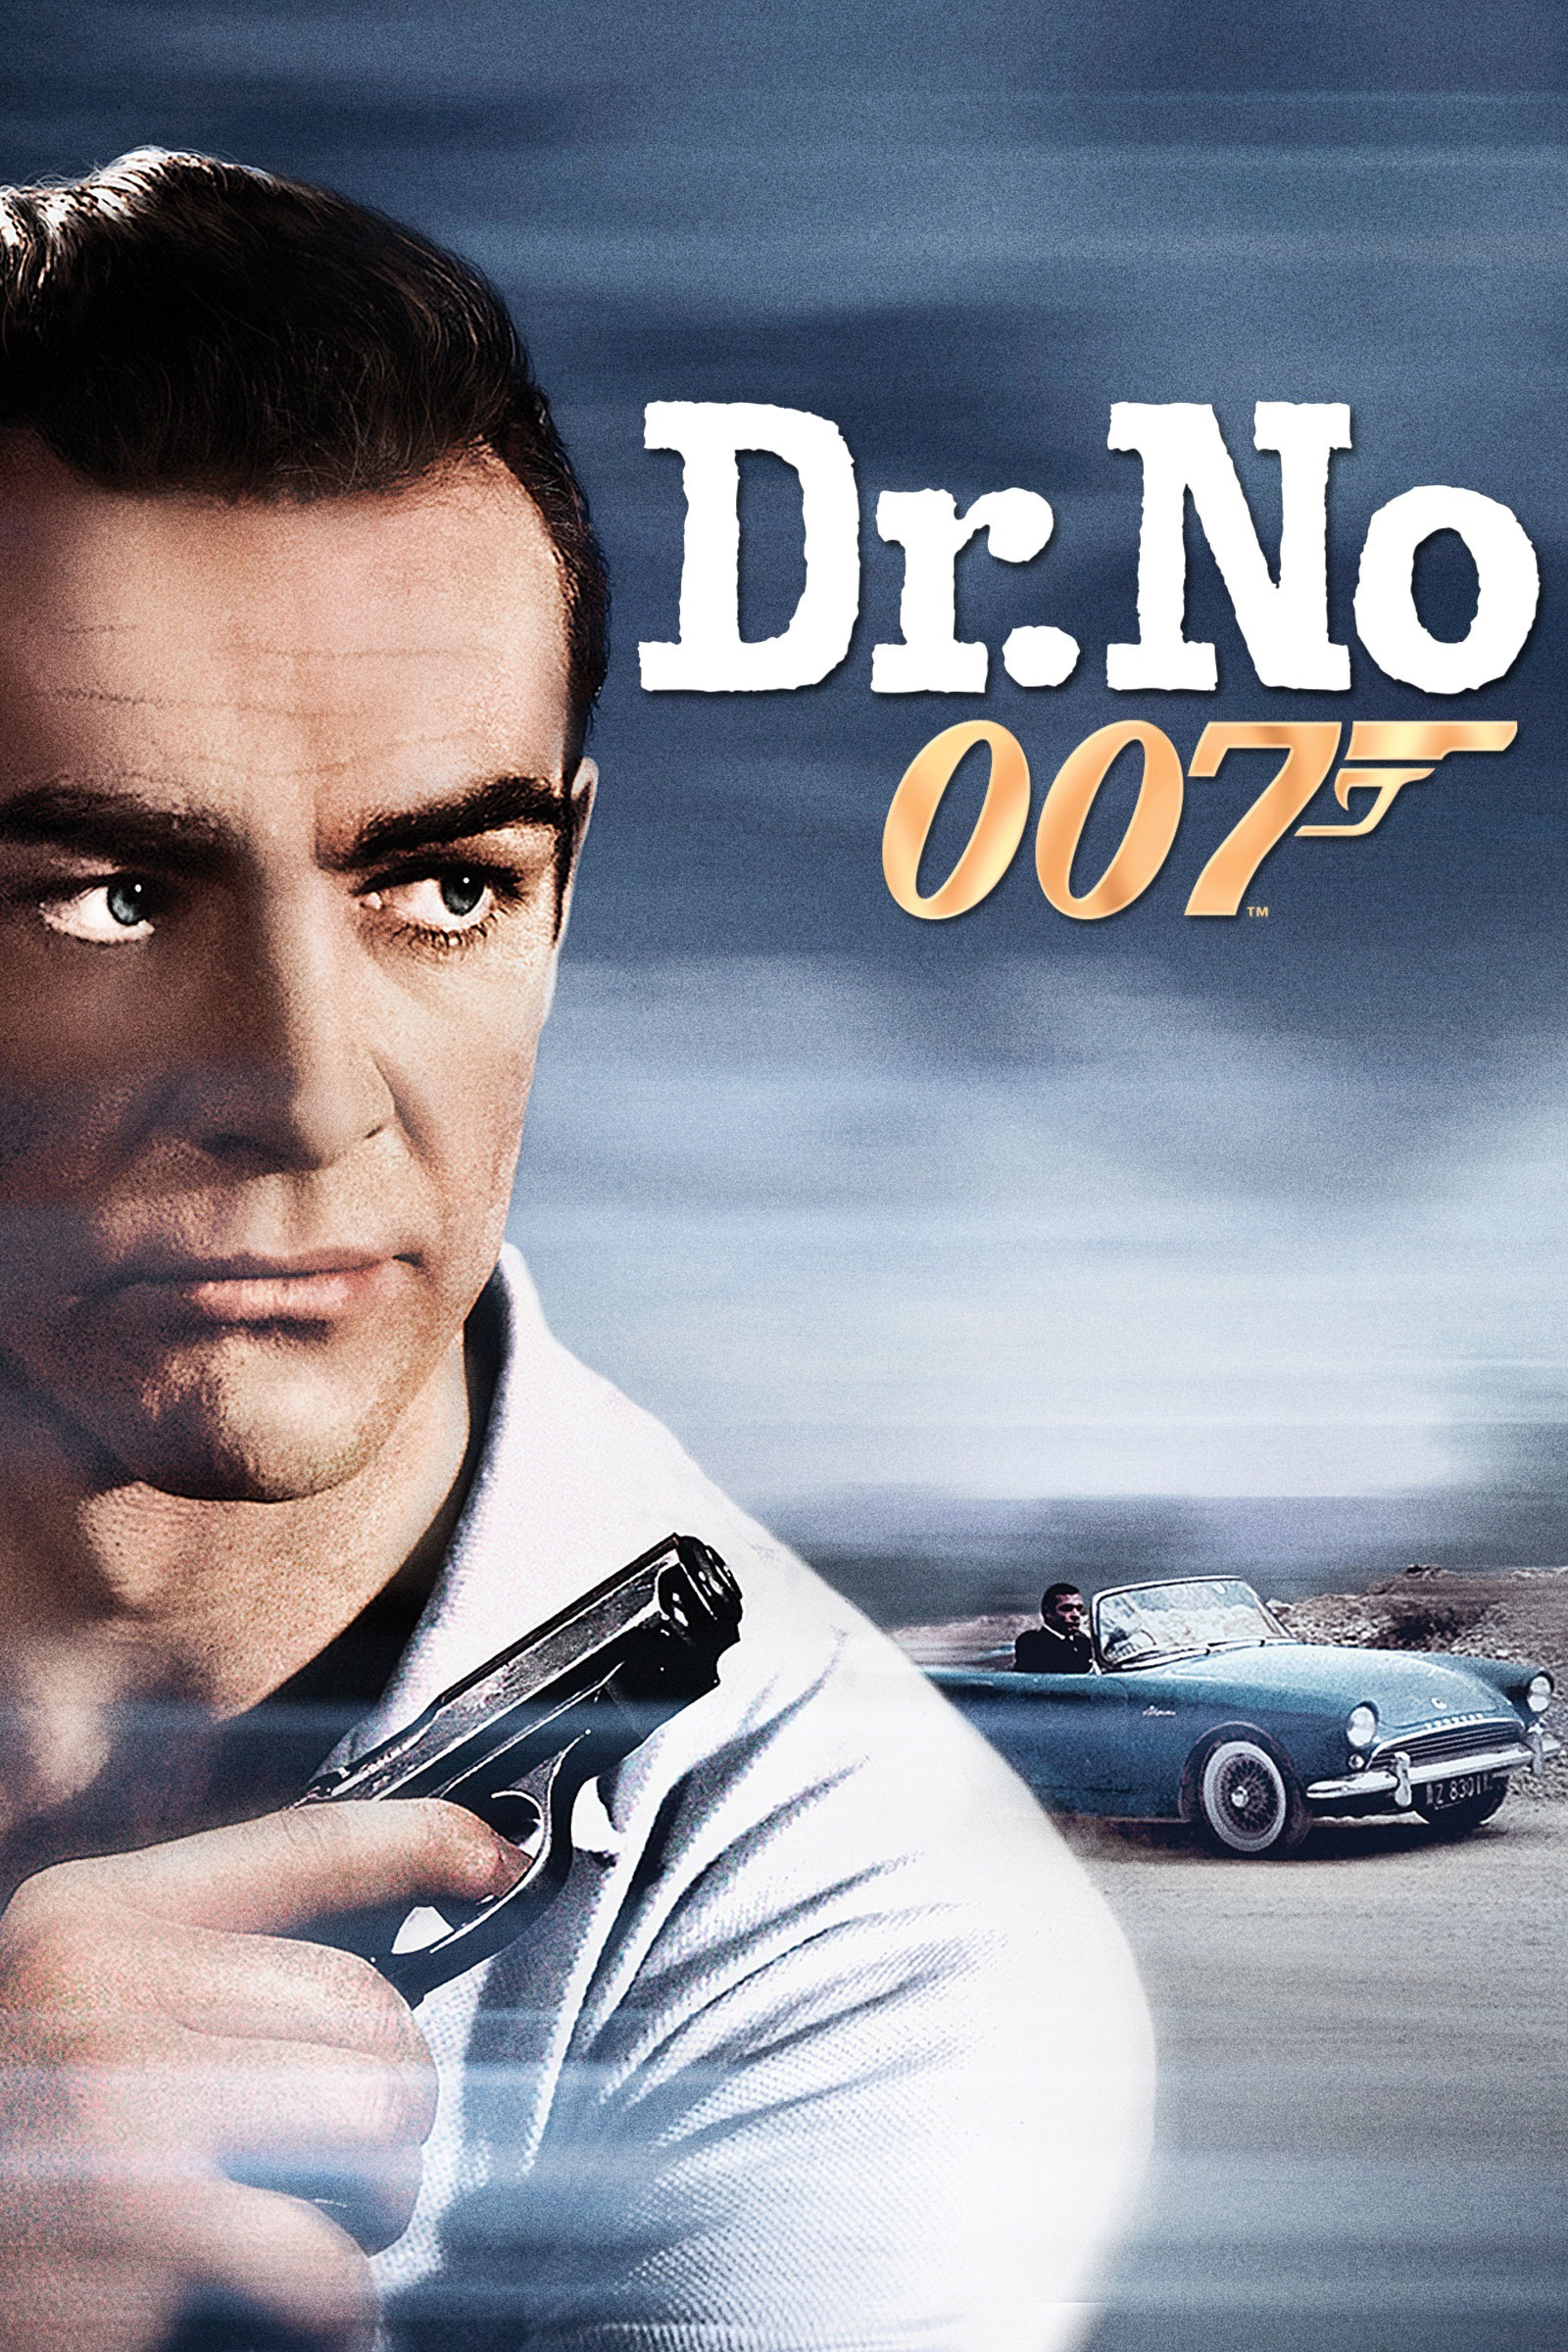 James Bond Through The Years